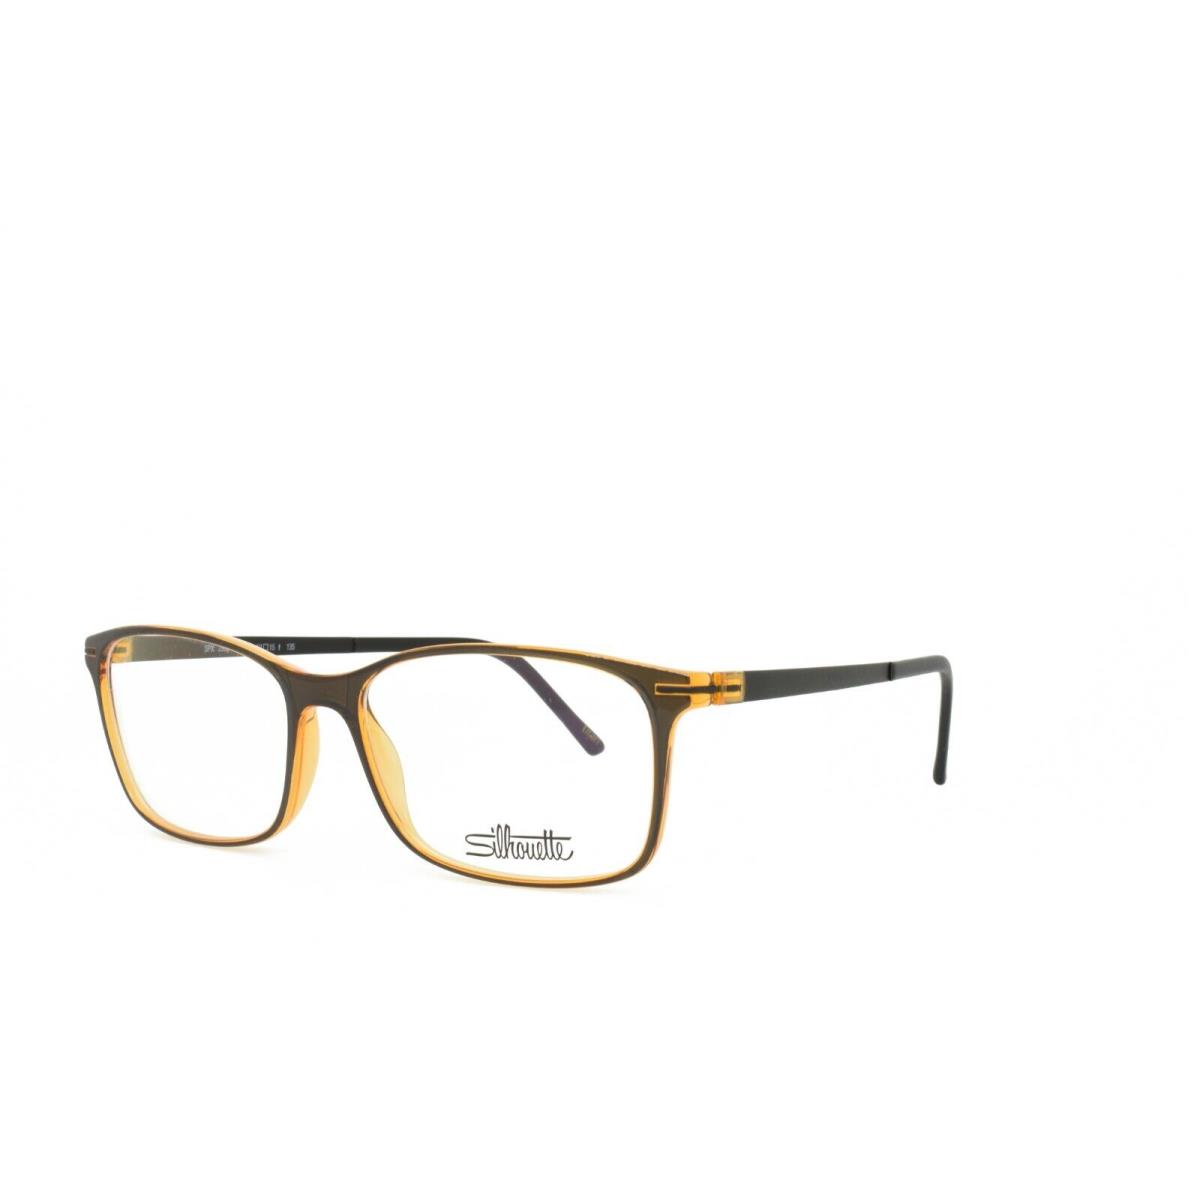 Silhouette Spx Titan Accent 2905 75 2540 53-15-135 Eyeglasses Brown Yellow - Frame: Brown